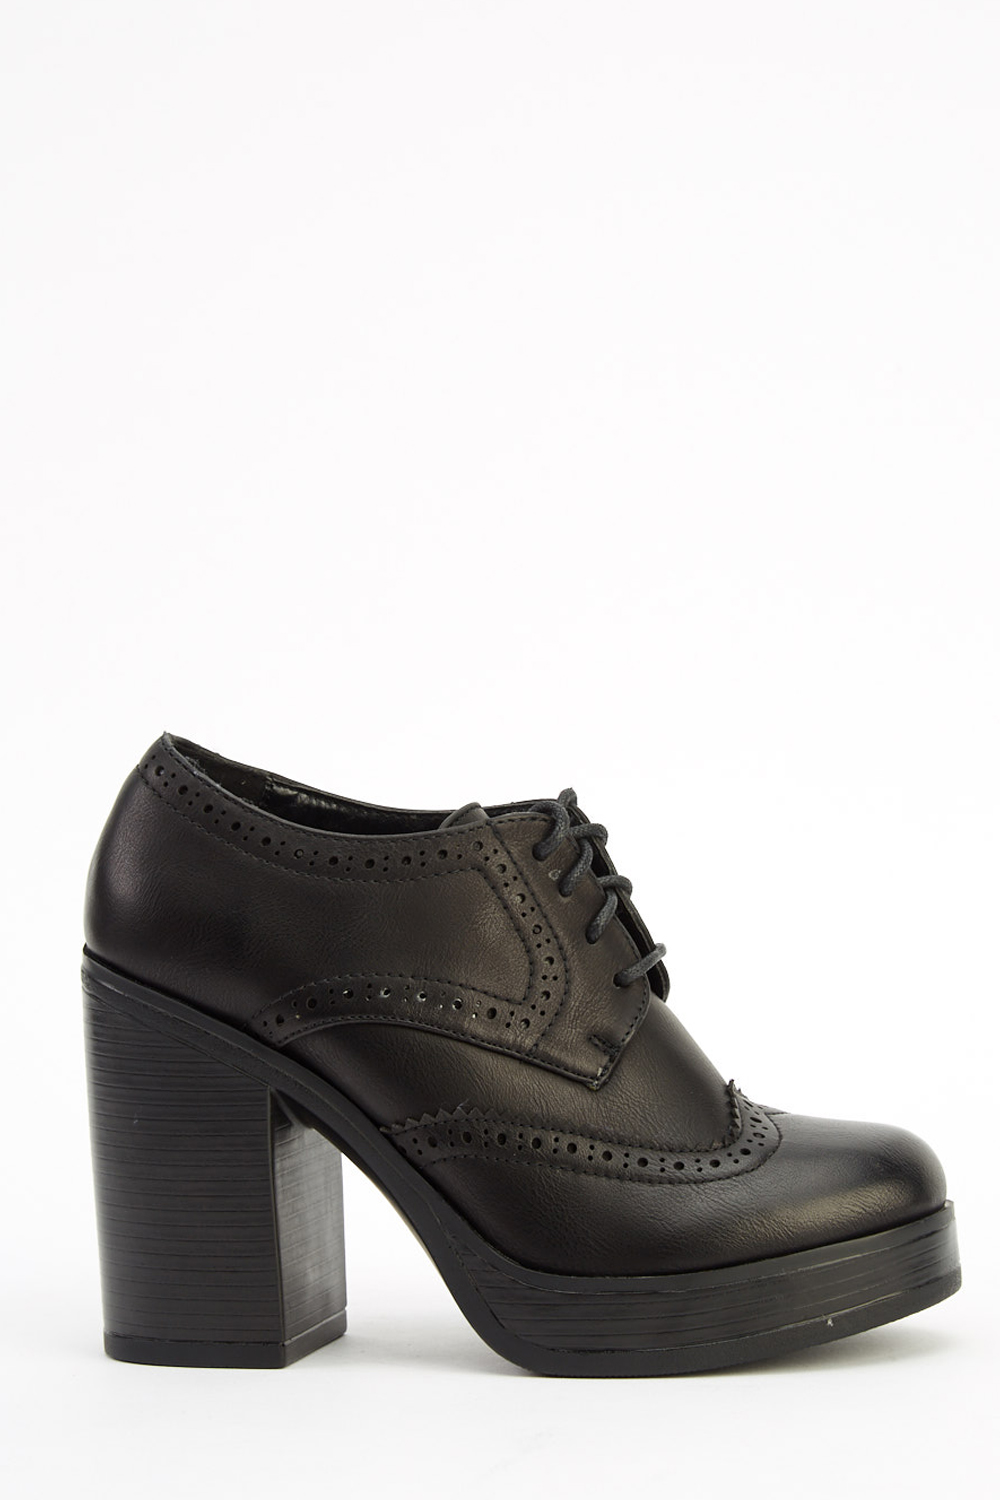 black heeled brogues